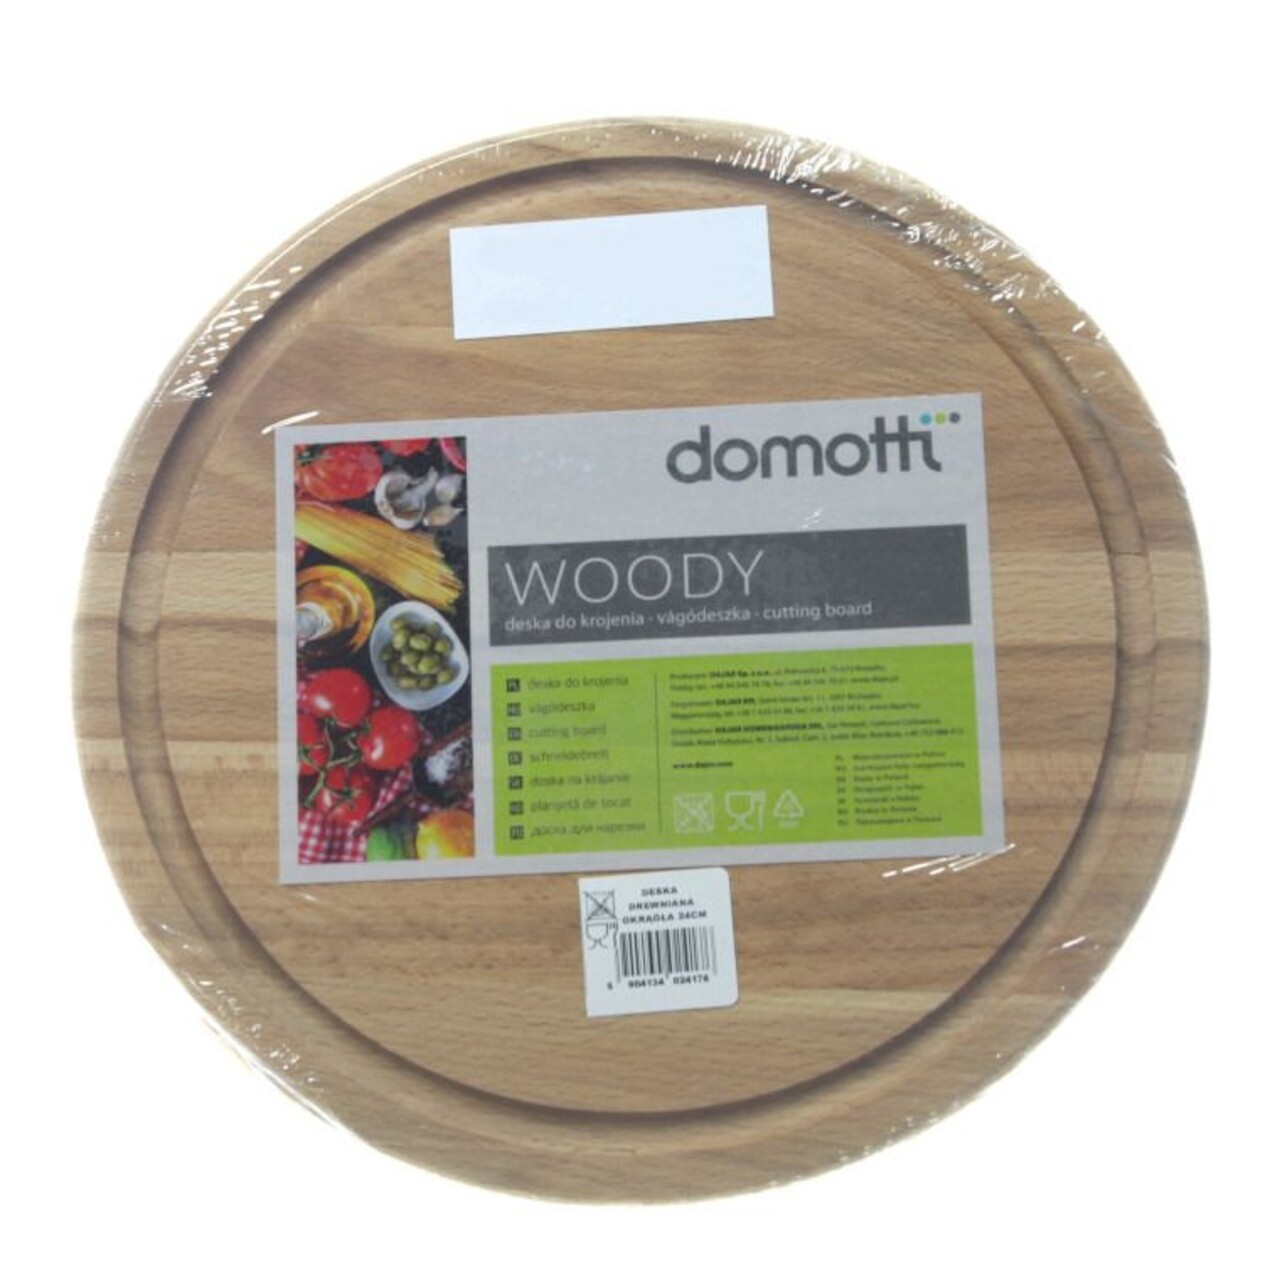 Tocator Rotund Woody, Domotti, 24 Cm, Lemn